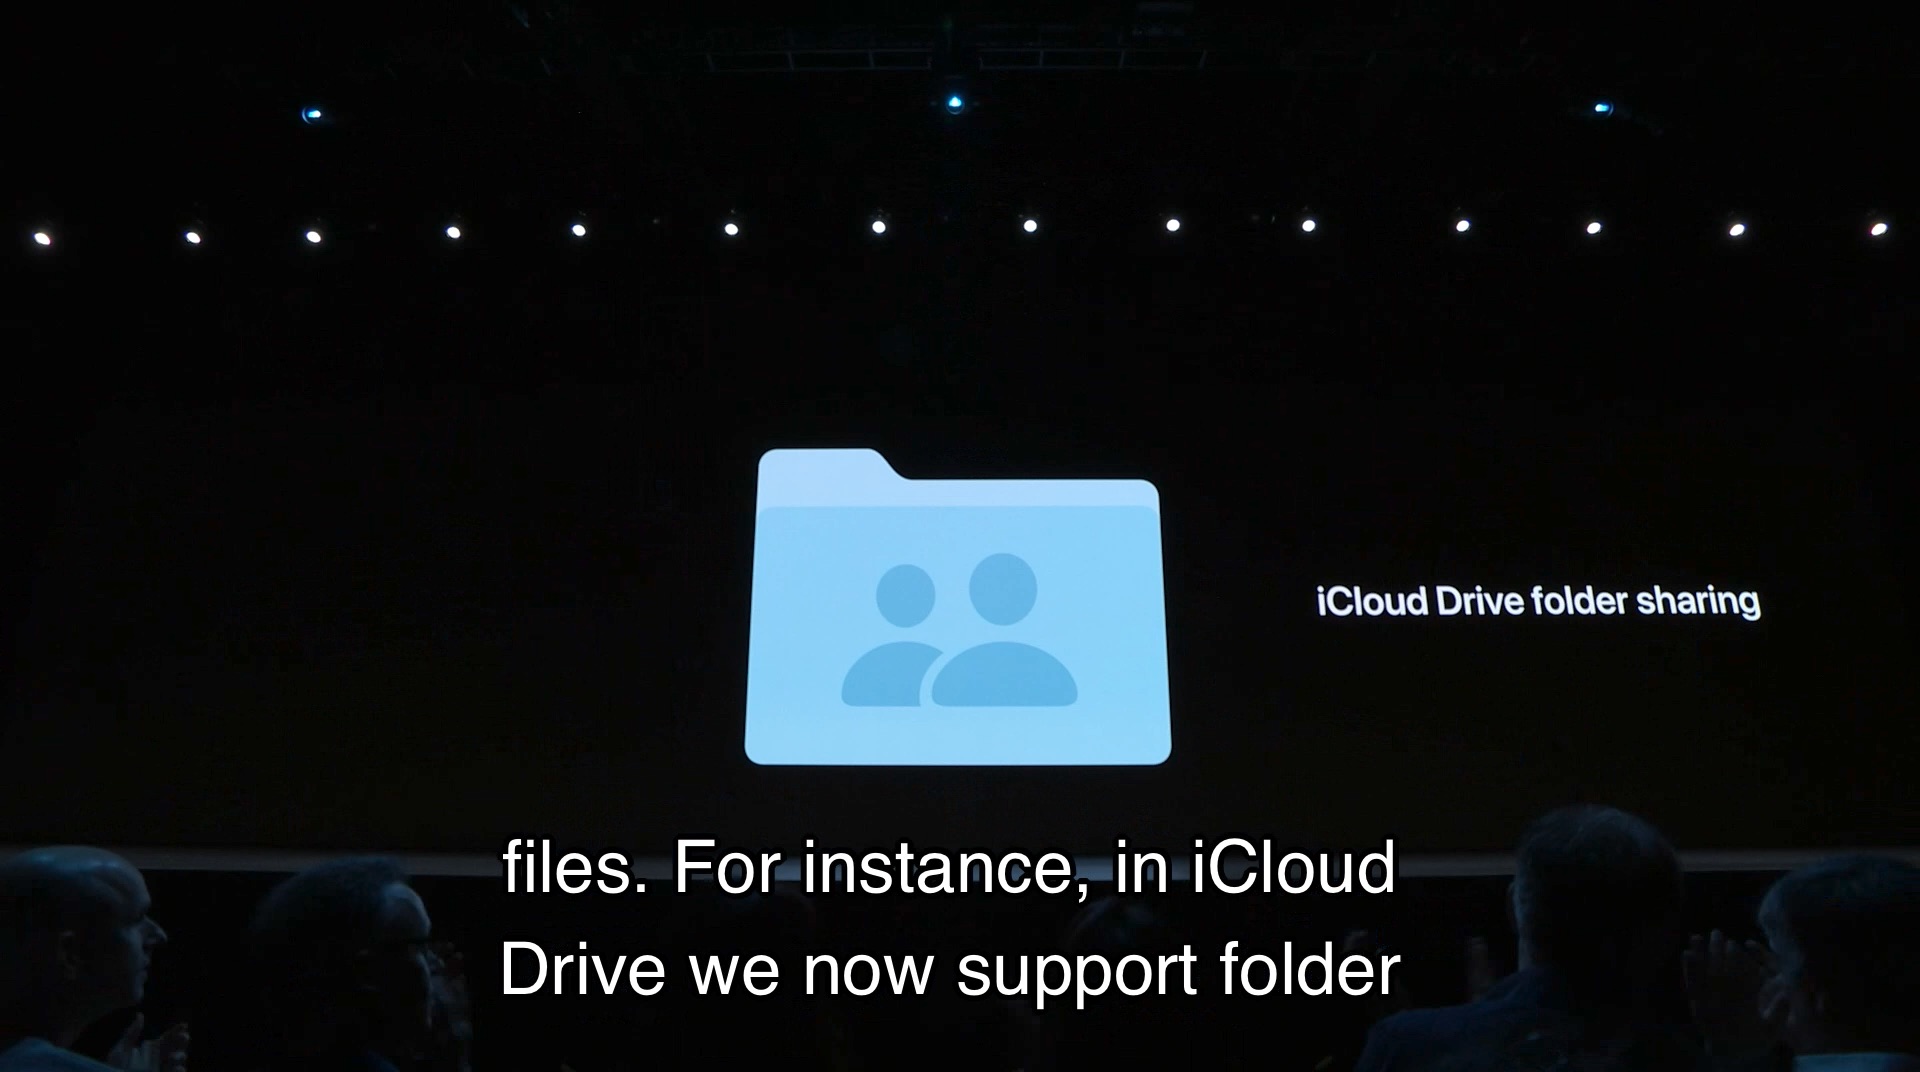 iCloud Drive folder sharing